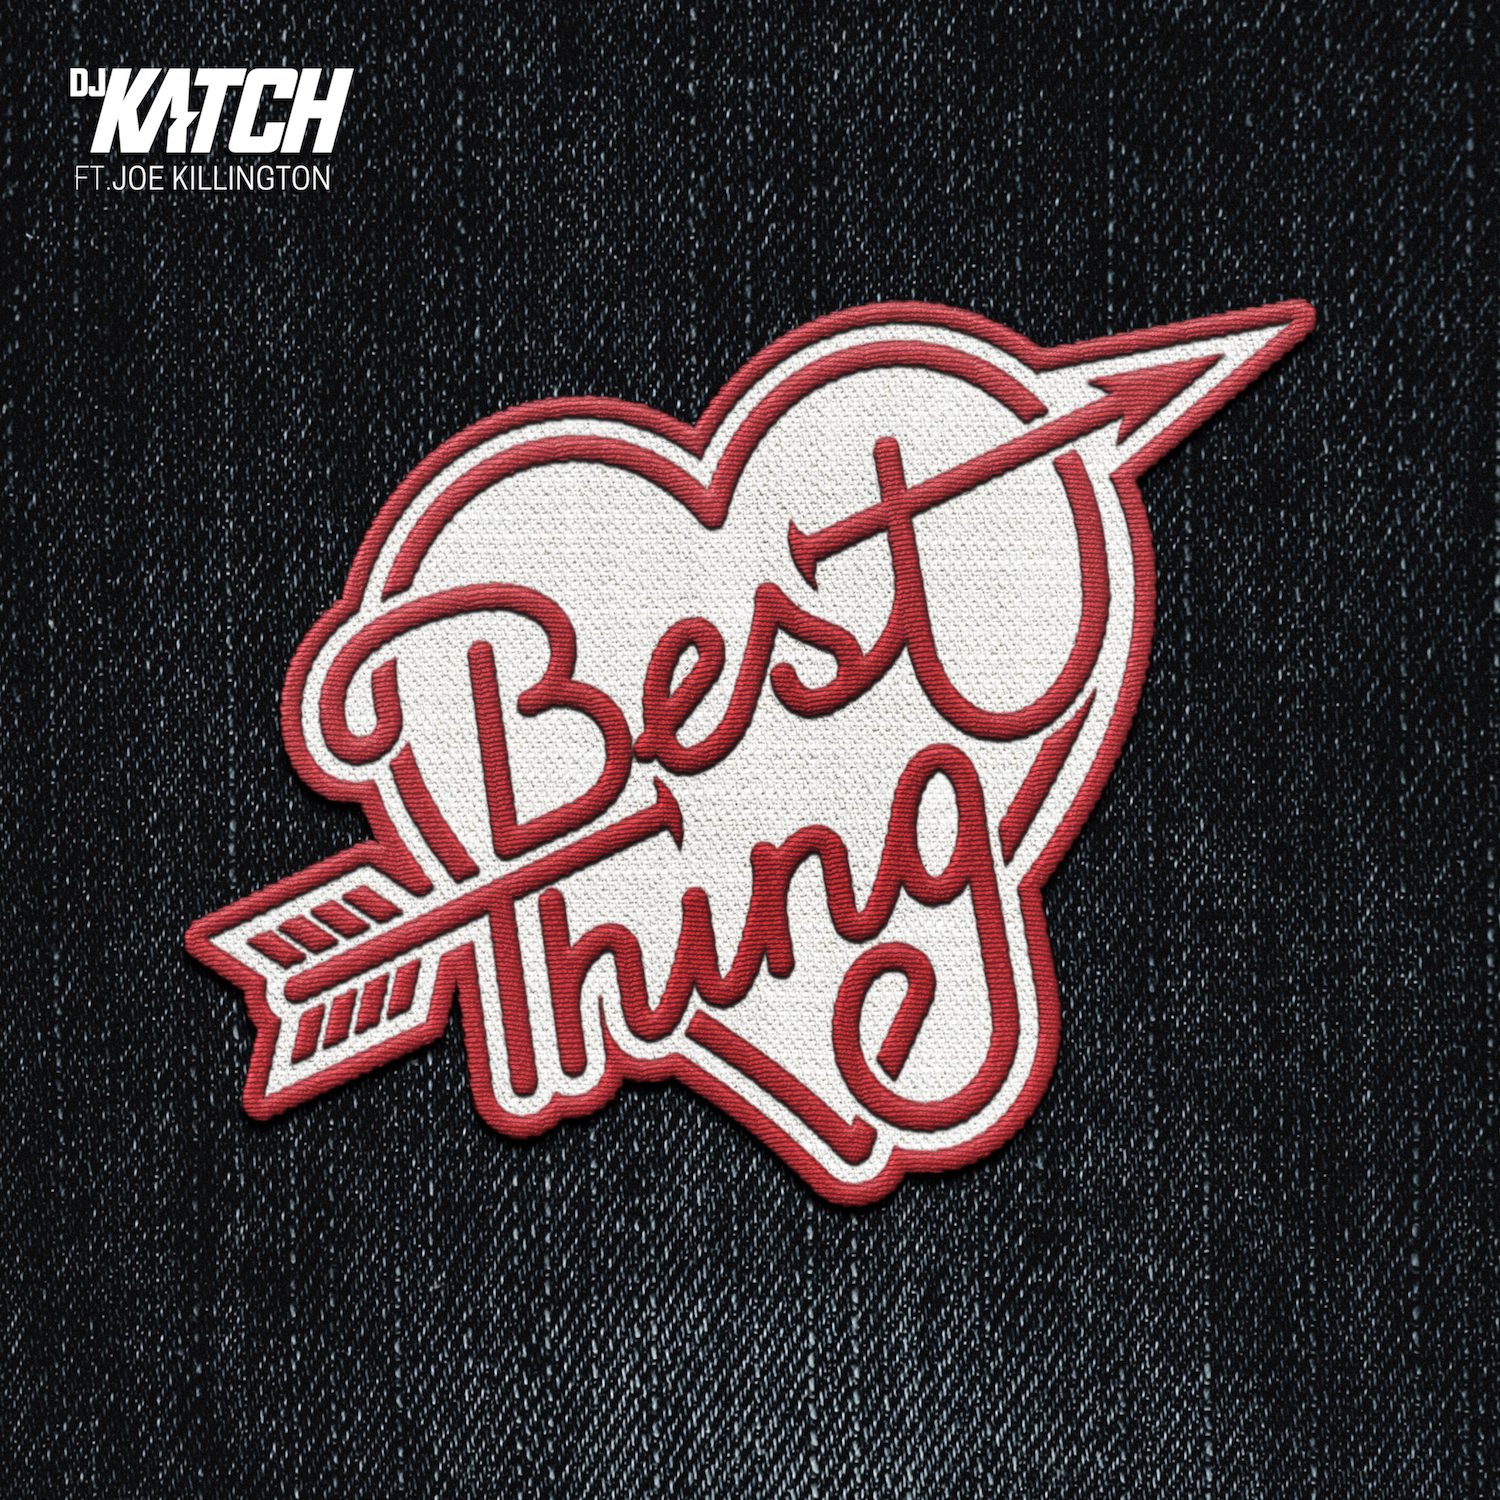 DJ Katch - Best Thing